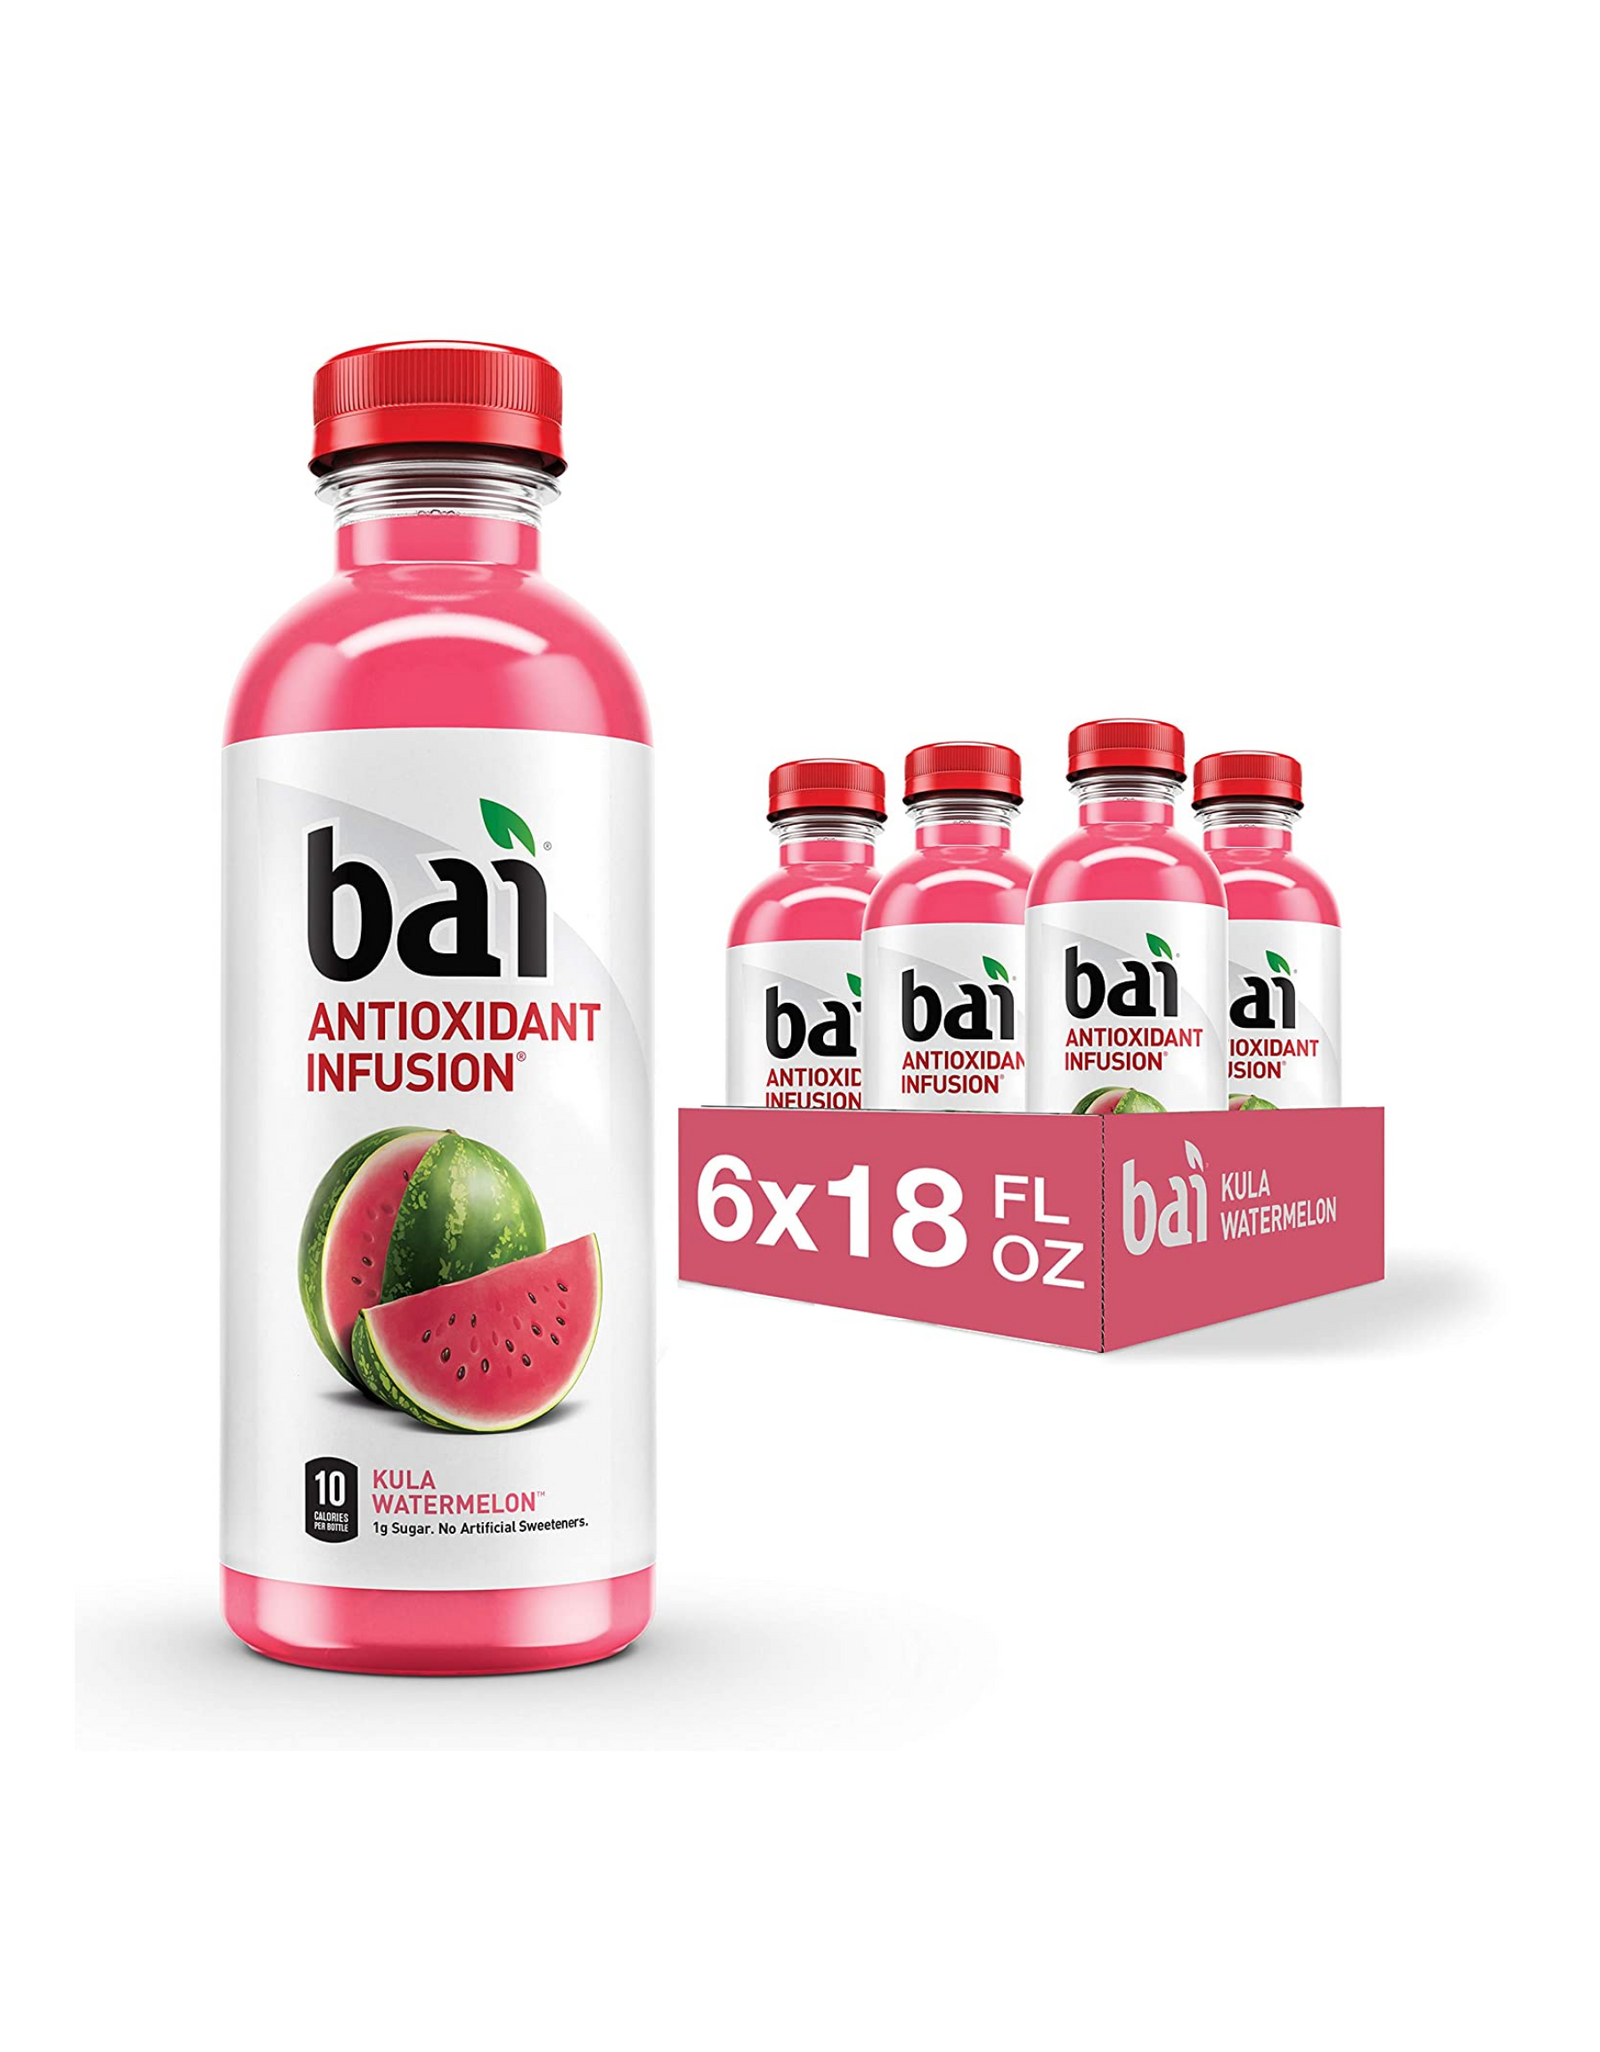 Bai Flavored Water, Kula Watermelon, Antioxidant Infusion Drinks, 18 fl oz (Pack of 6)